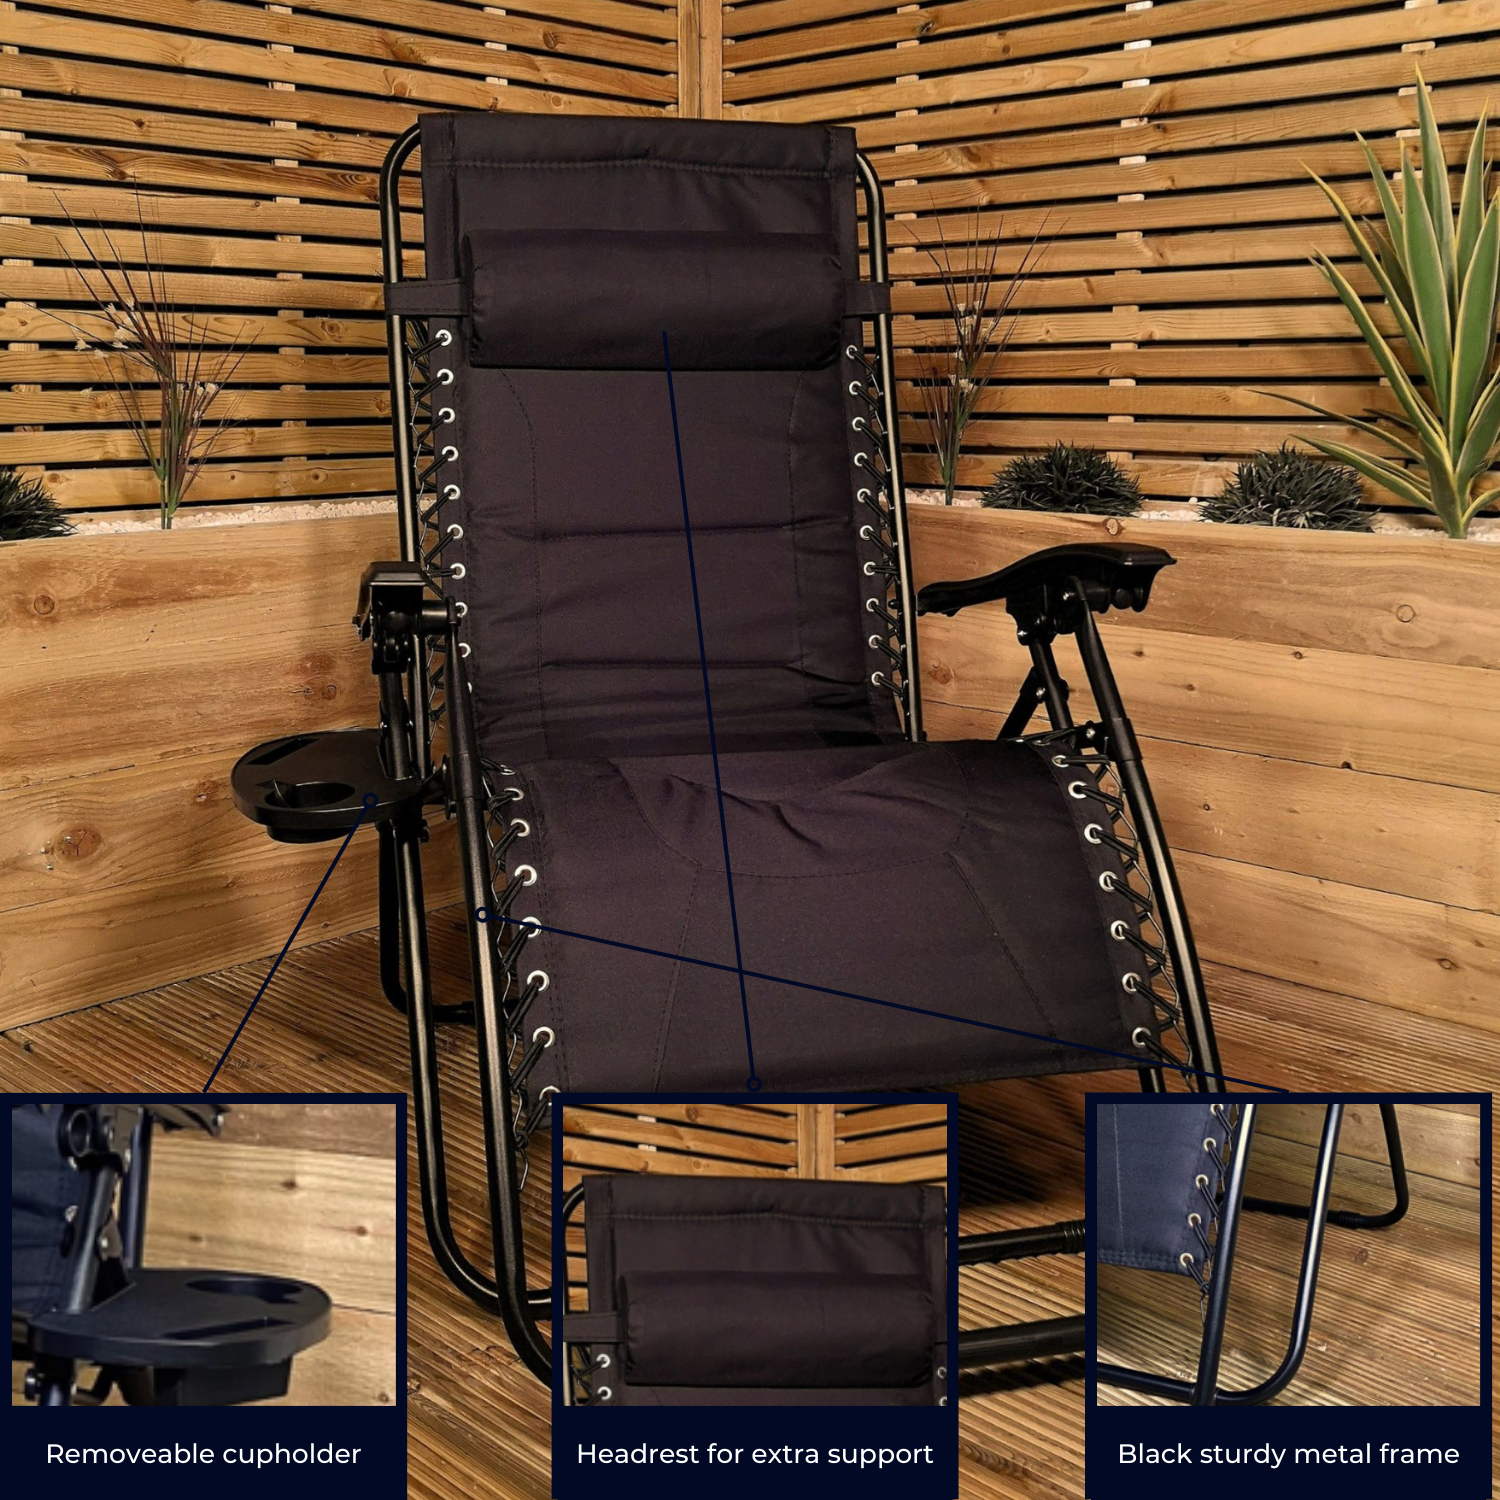 Luxury Padded Multi Position Zero Gravity Garden Relaxer Chair Lounger in All Black